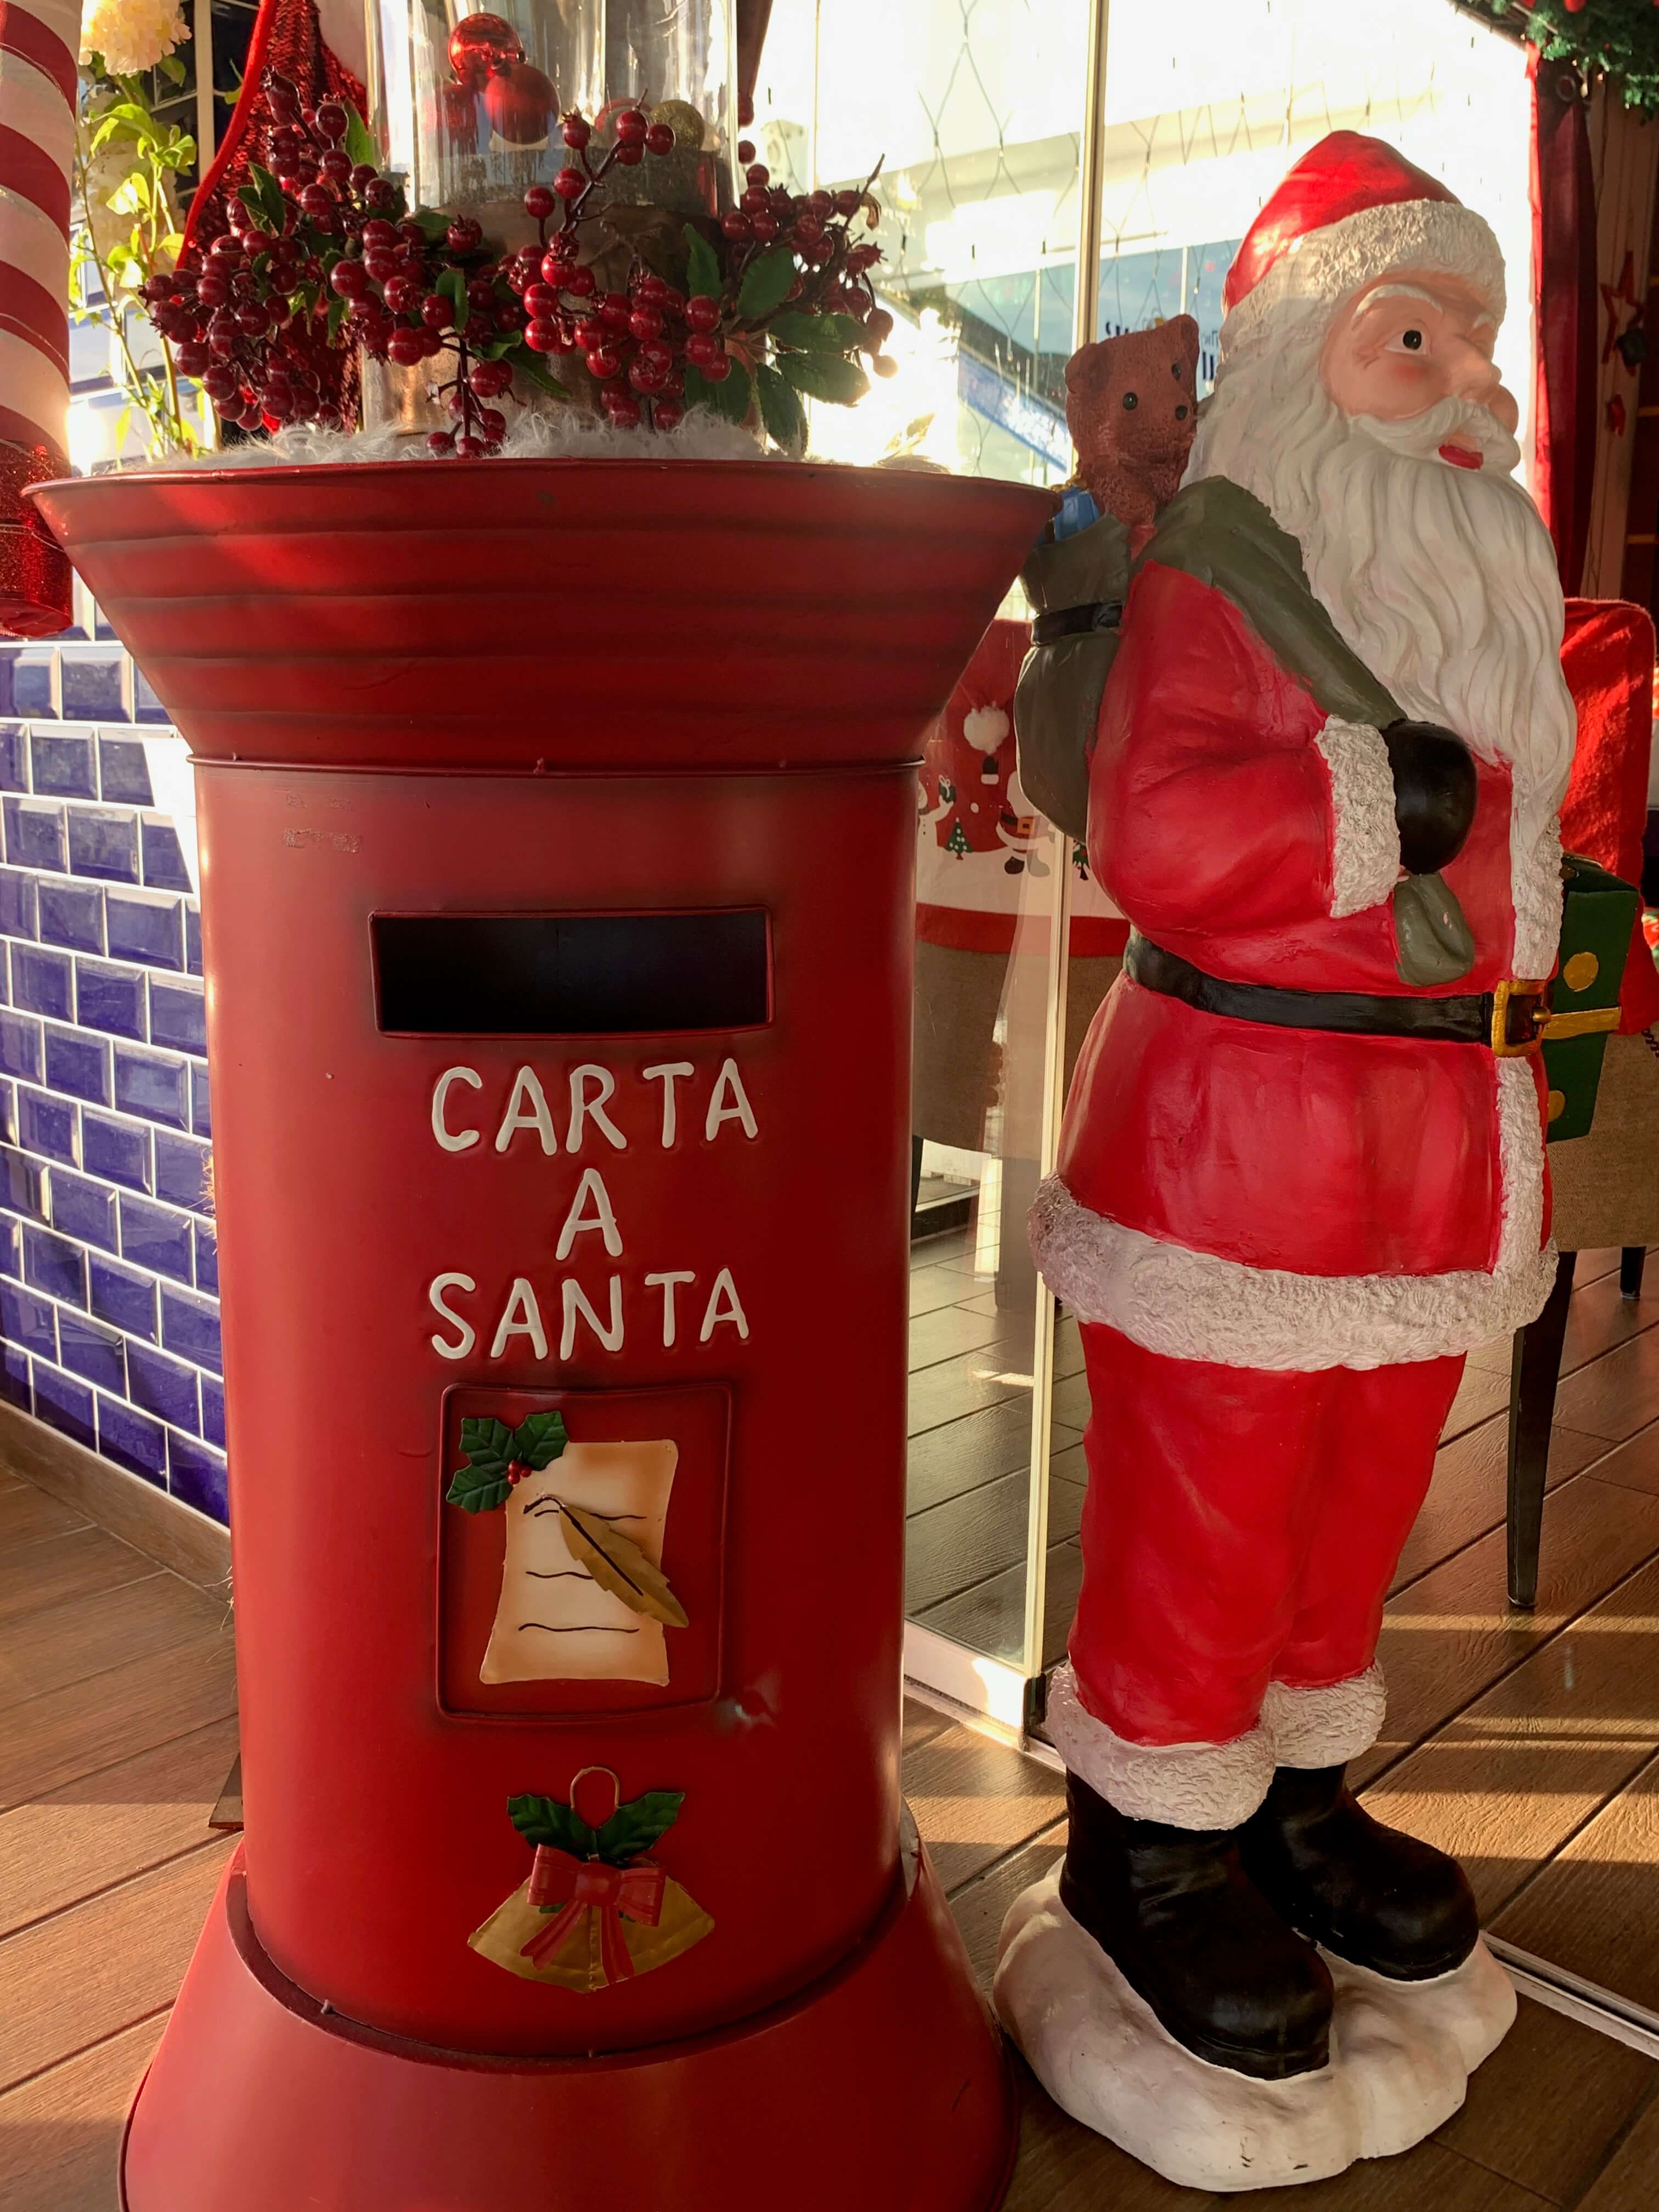 Christmas in Spain - Santa Claus